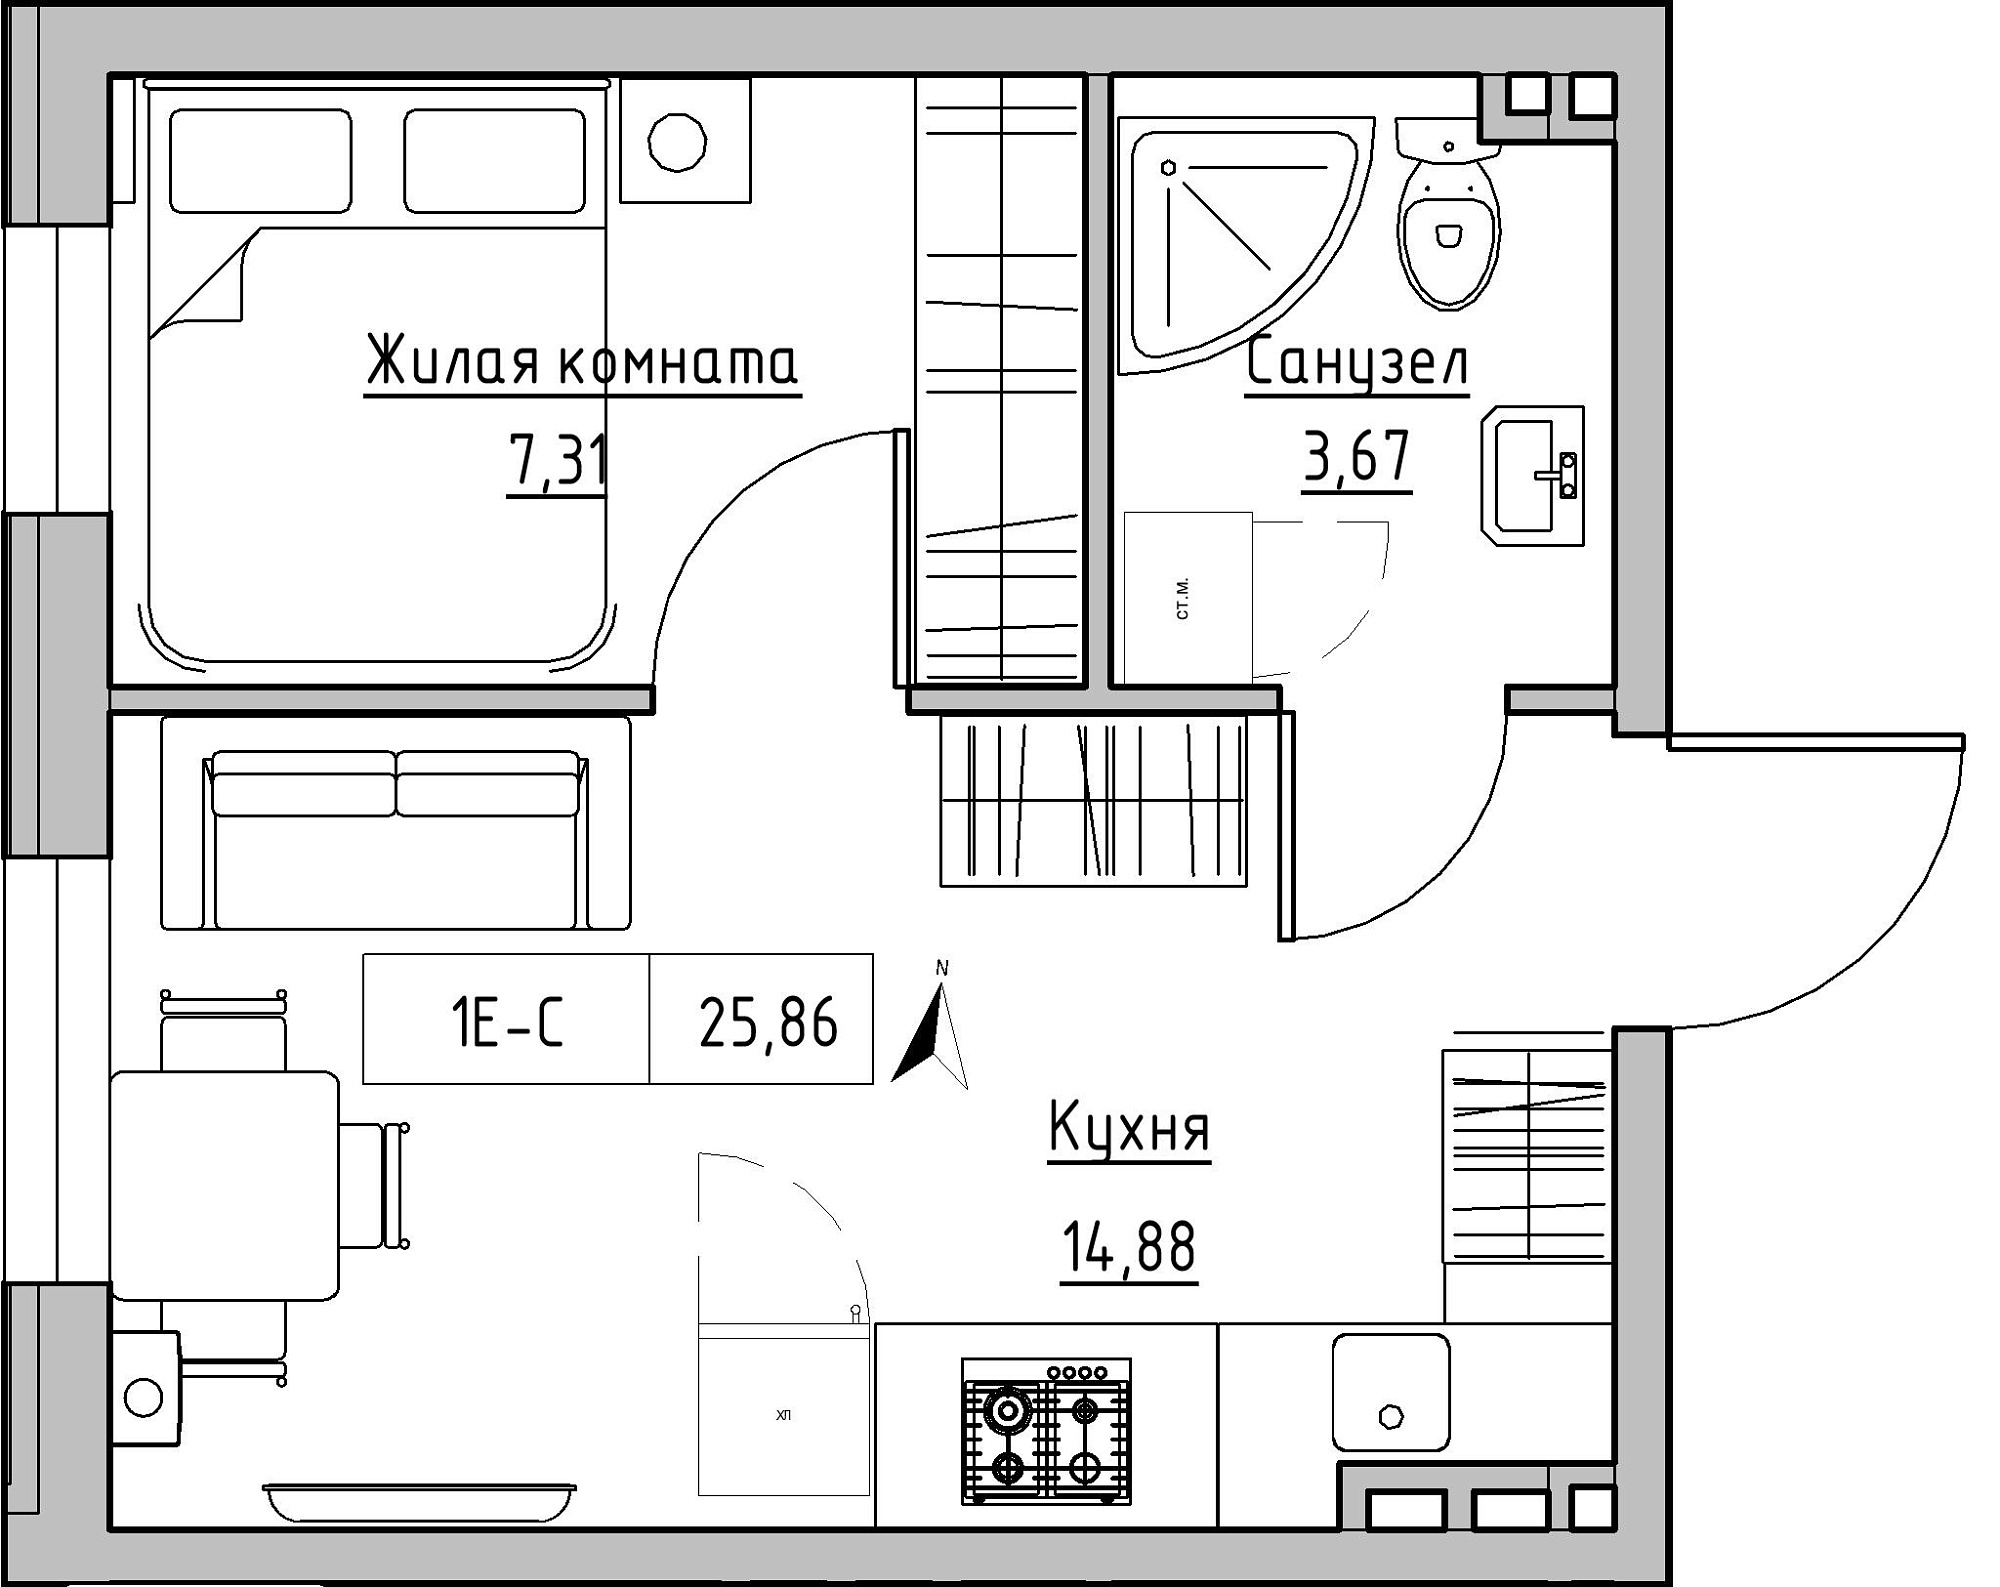 Planning 1-rm flats area 25.86m2, KS-024-02/0012.